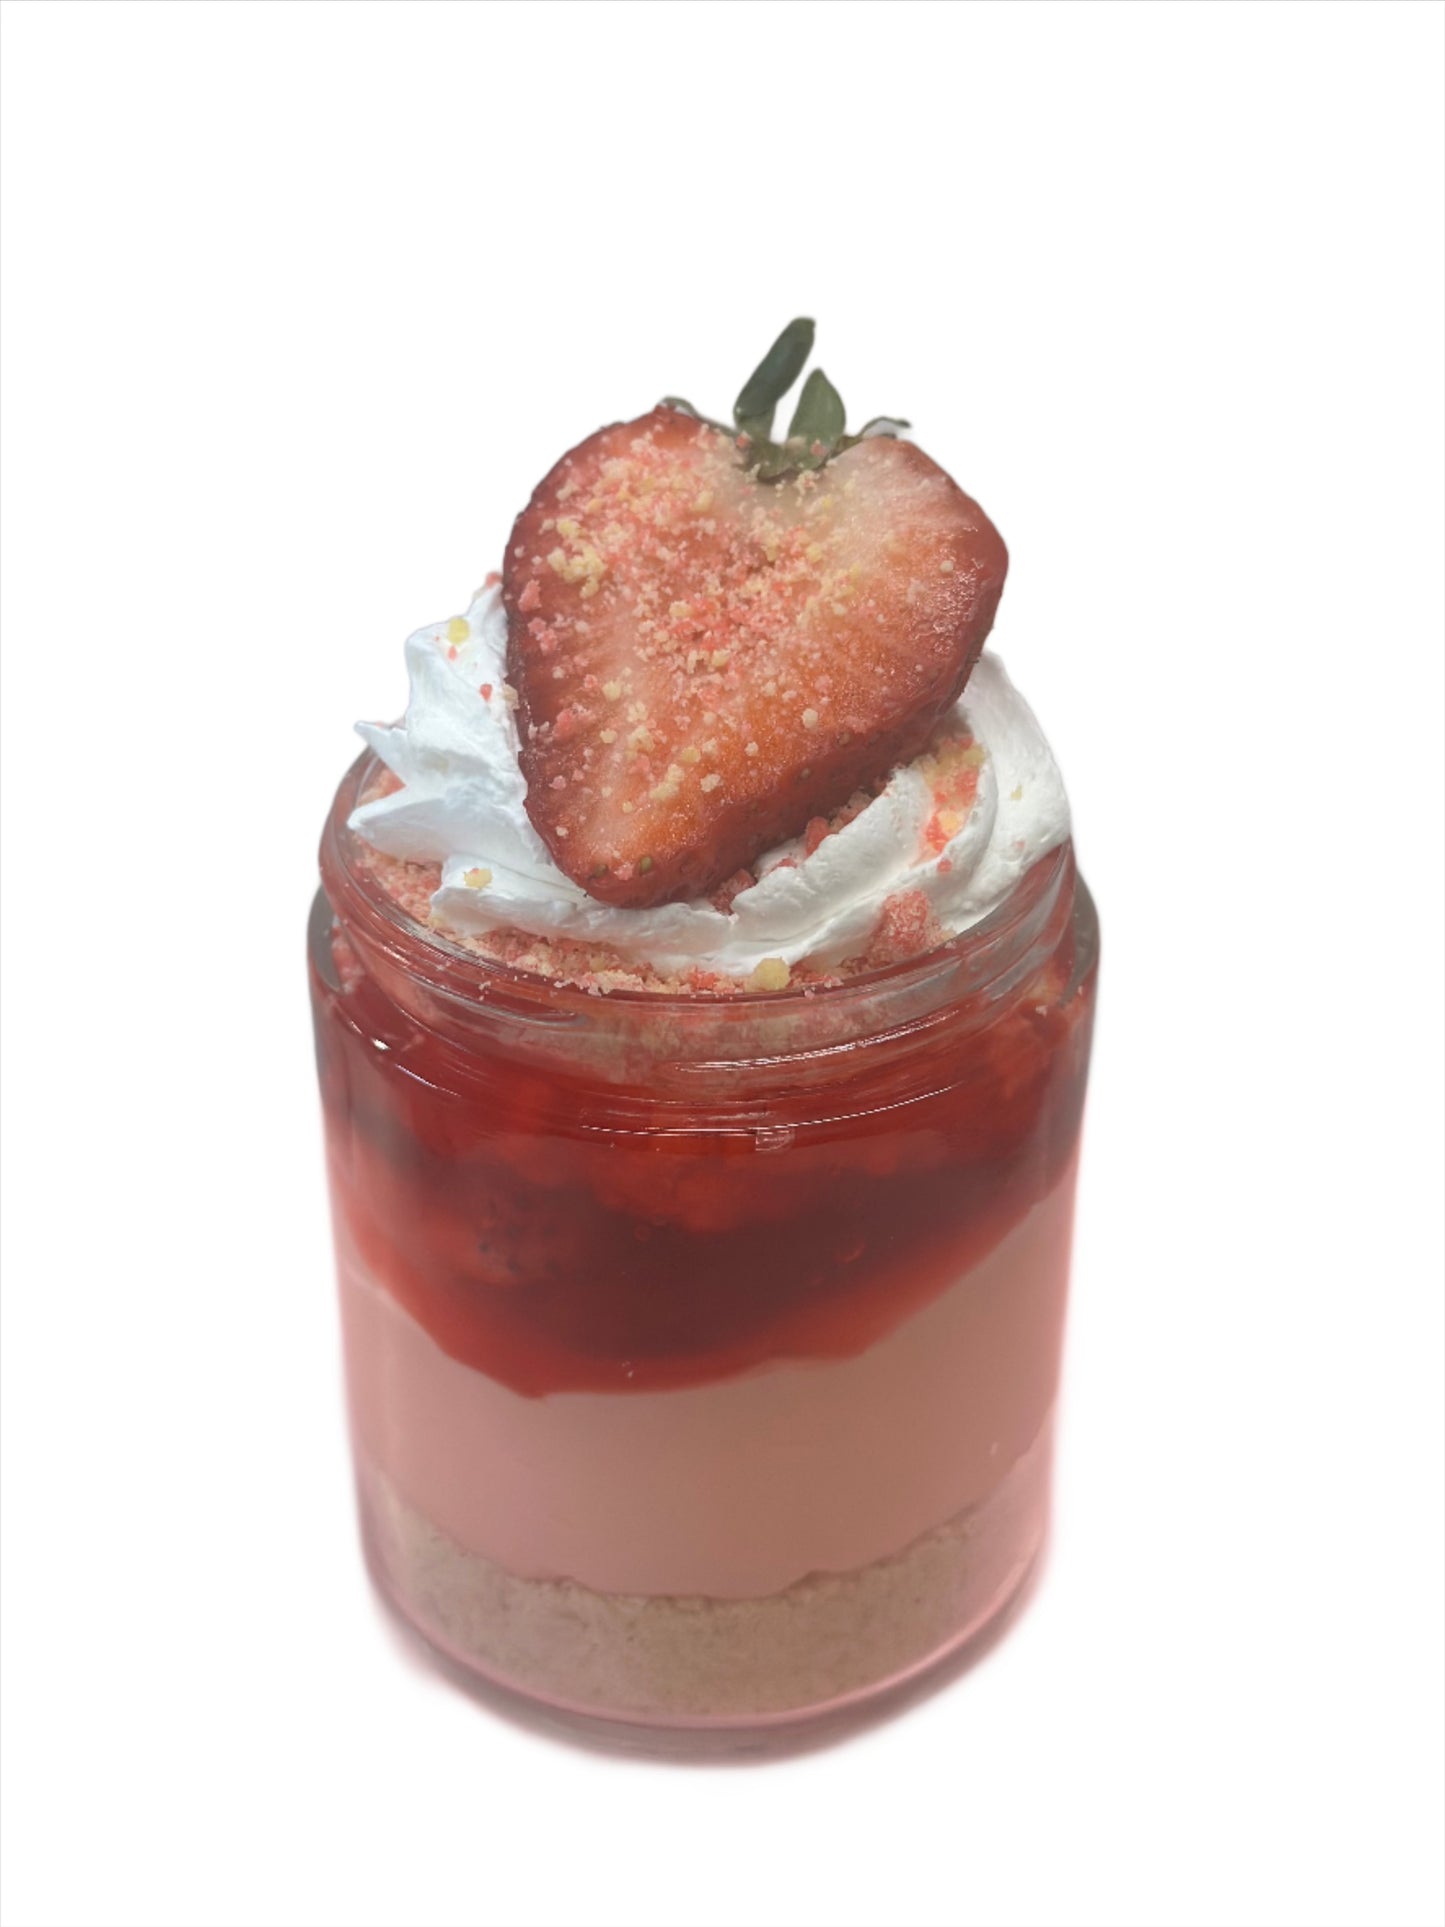 Sensational Strawberry Cheesecake Jars